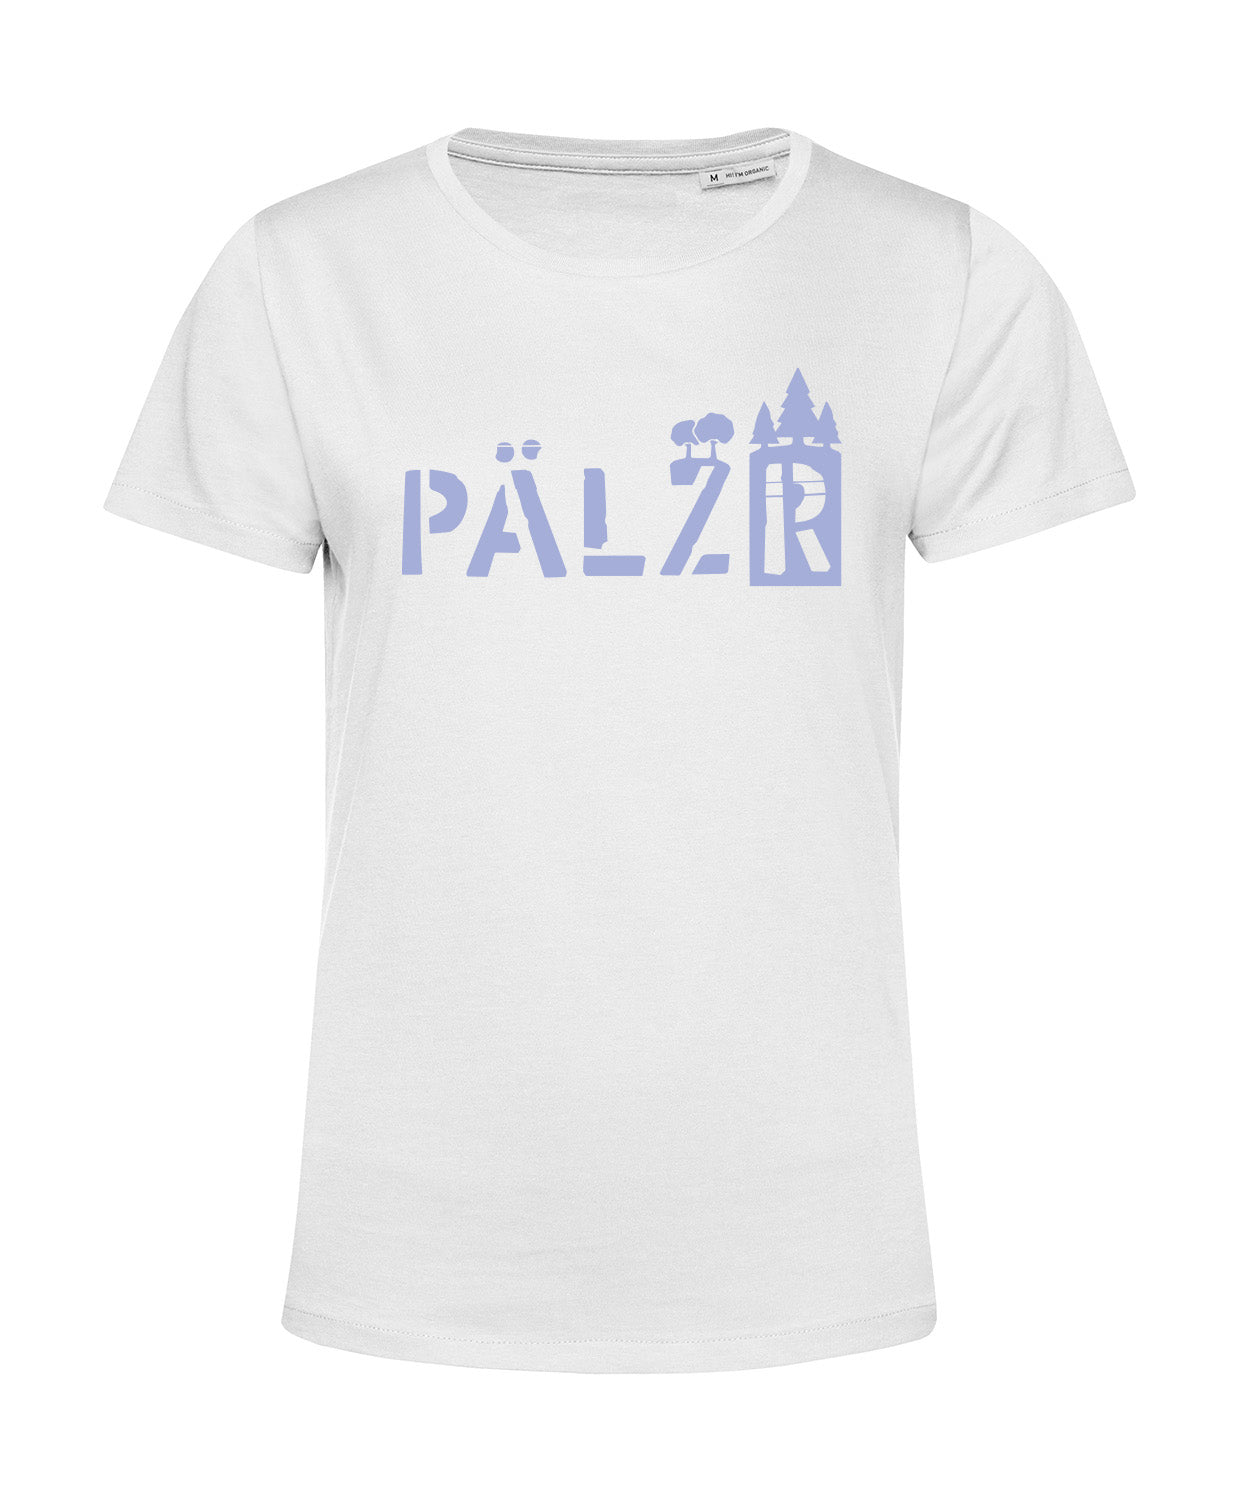 Frauen | T-Shirt | PÄLZRwald | weiss | Logo Lavendel